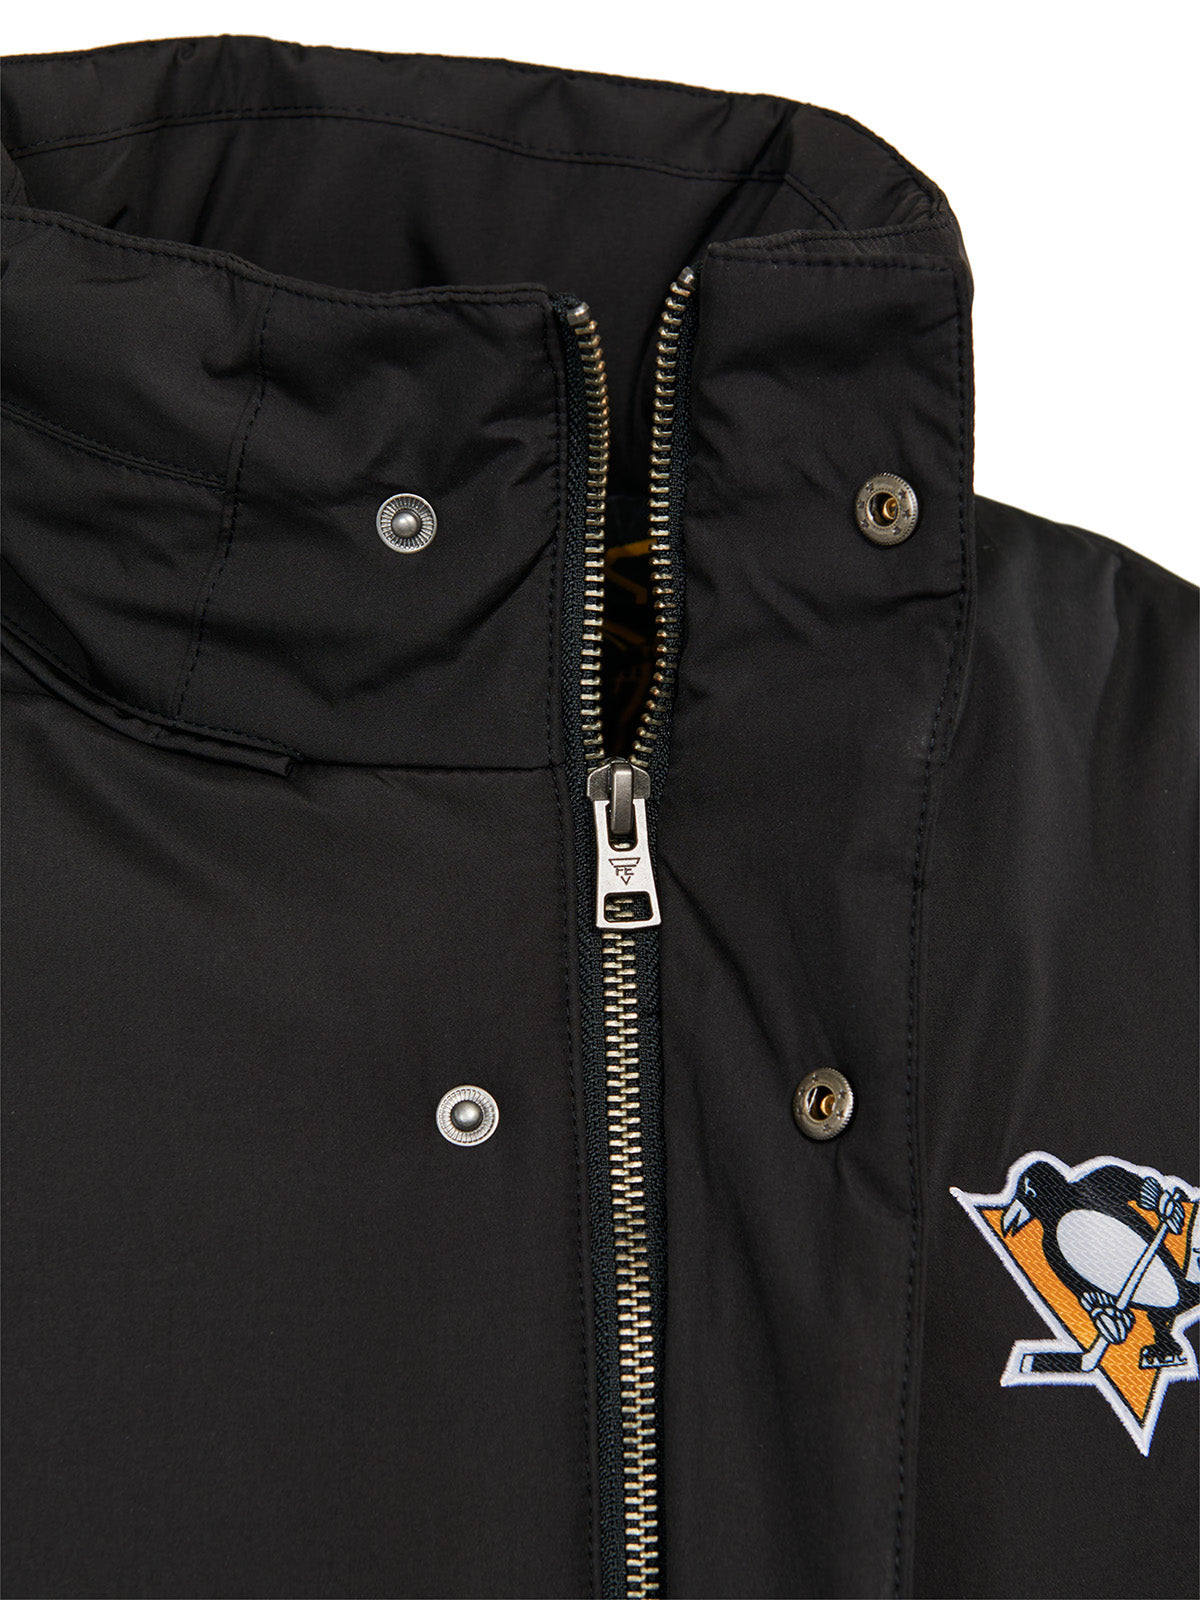 Pittsburgh Penguins Coach's Jacket